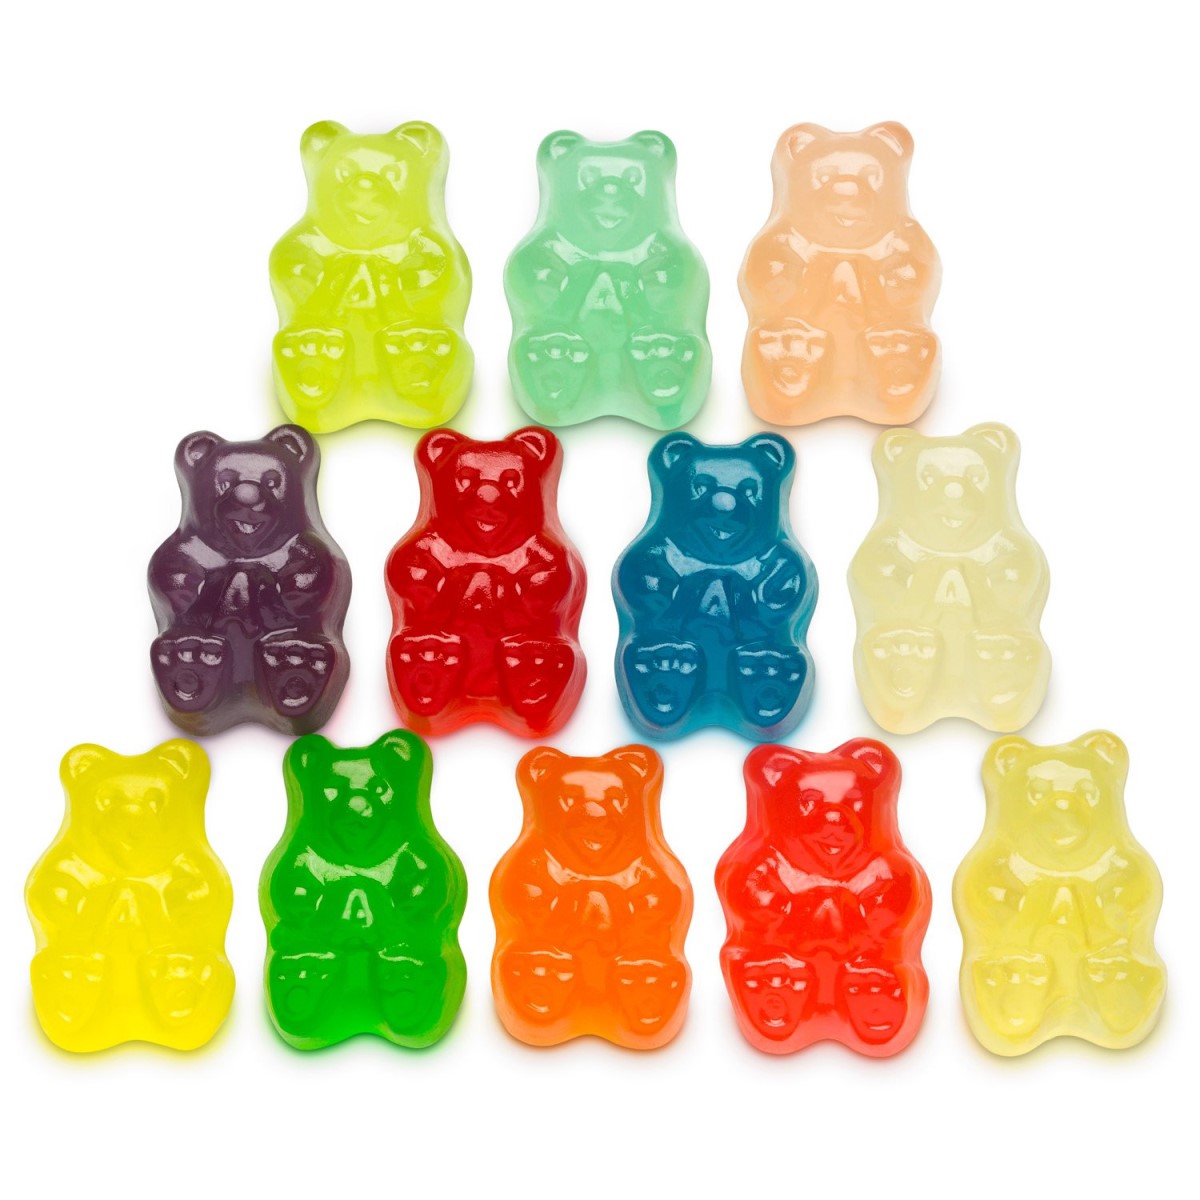 12 Flavor Gummi Bears, Candies